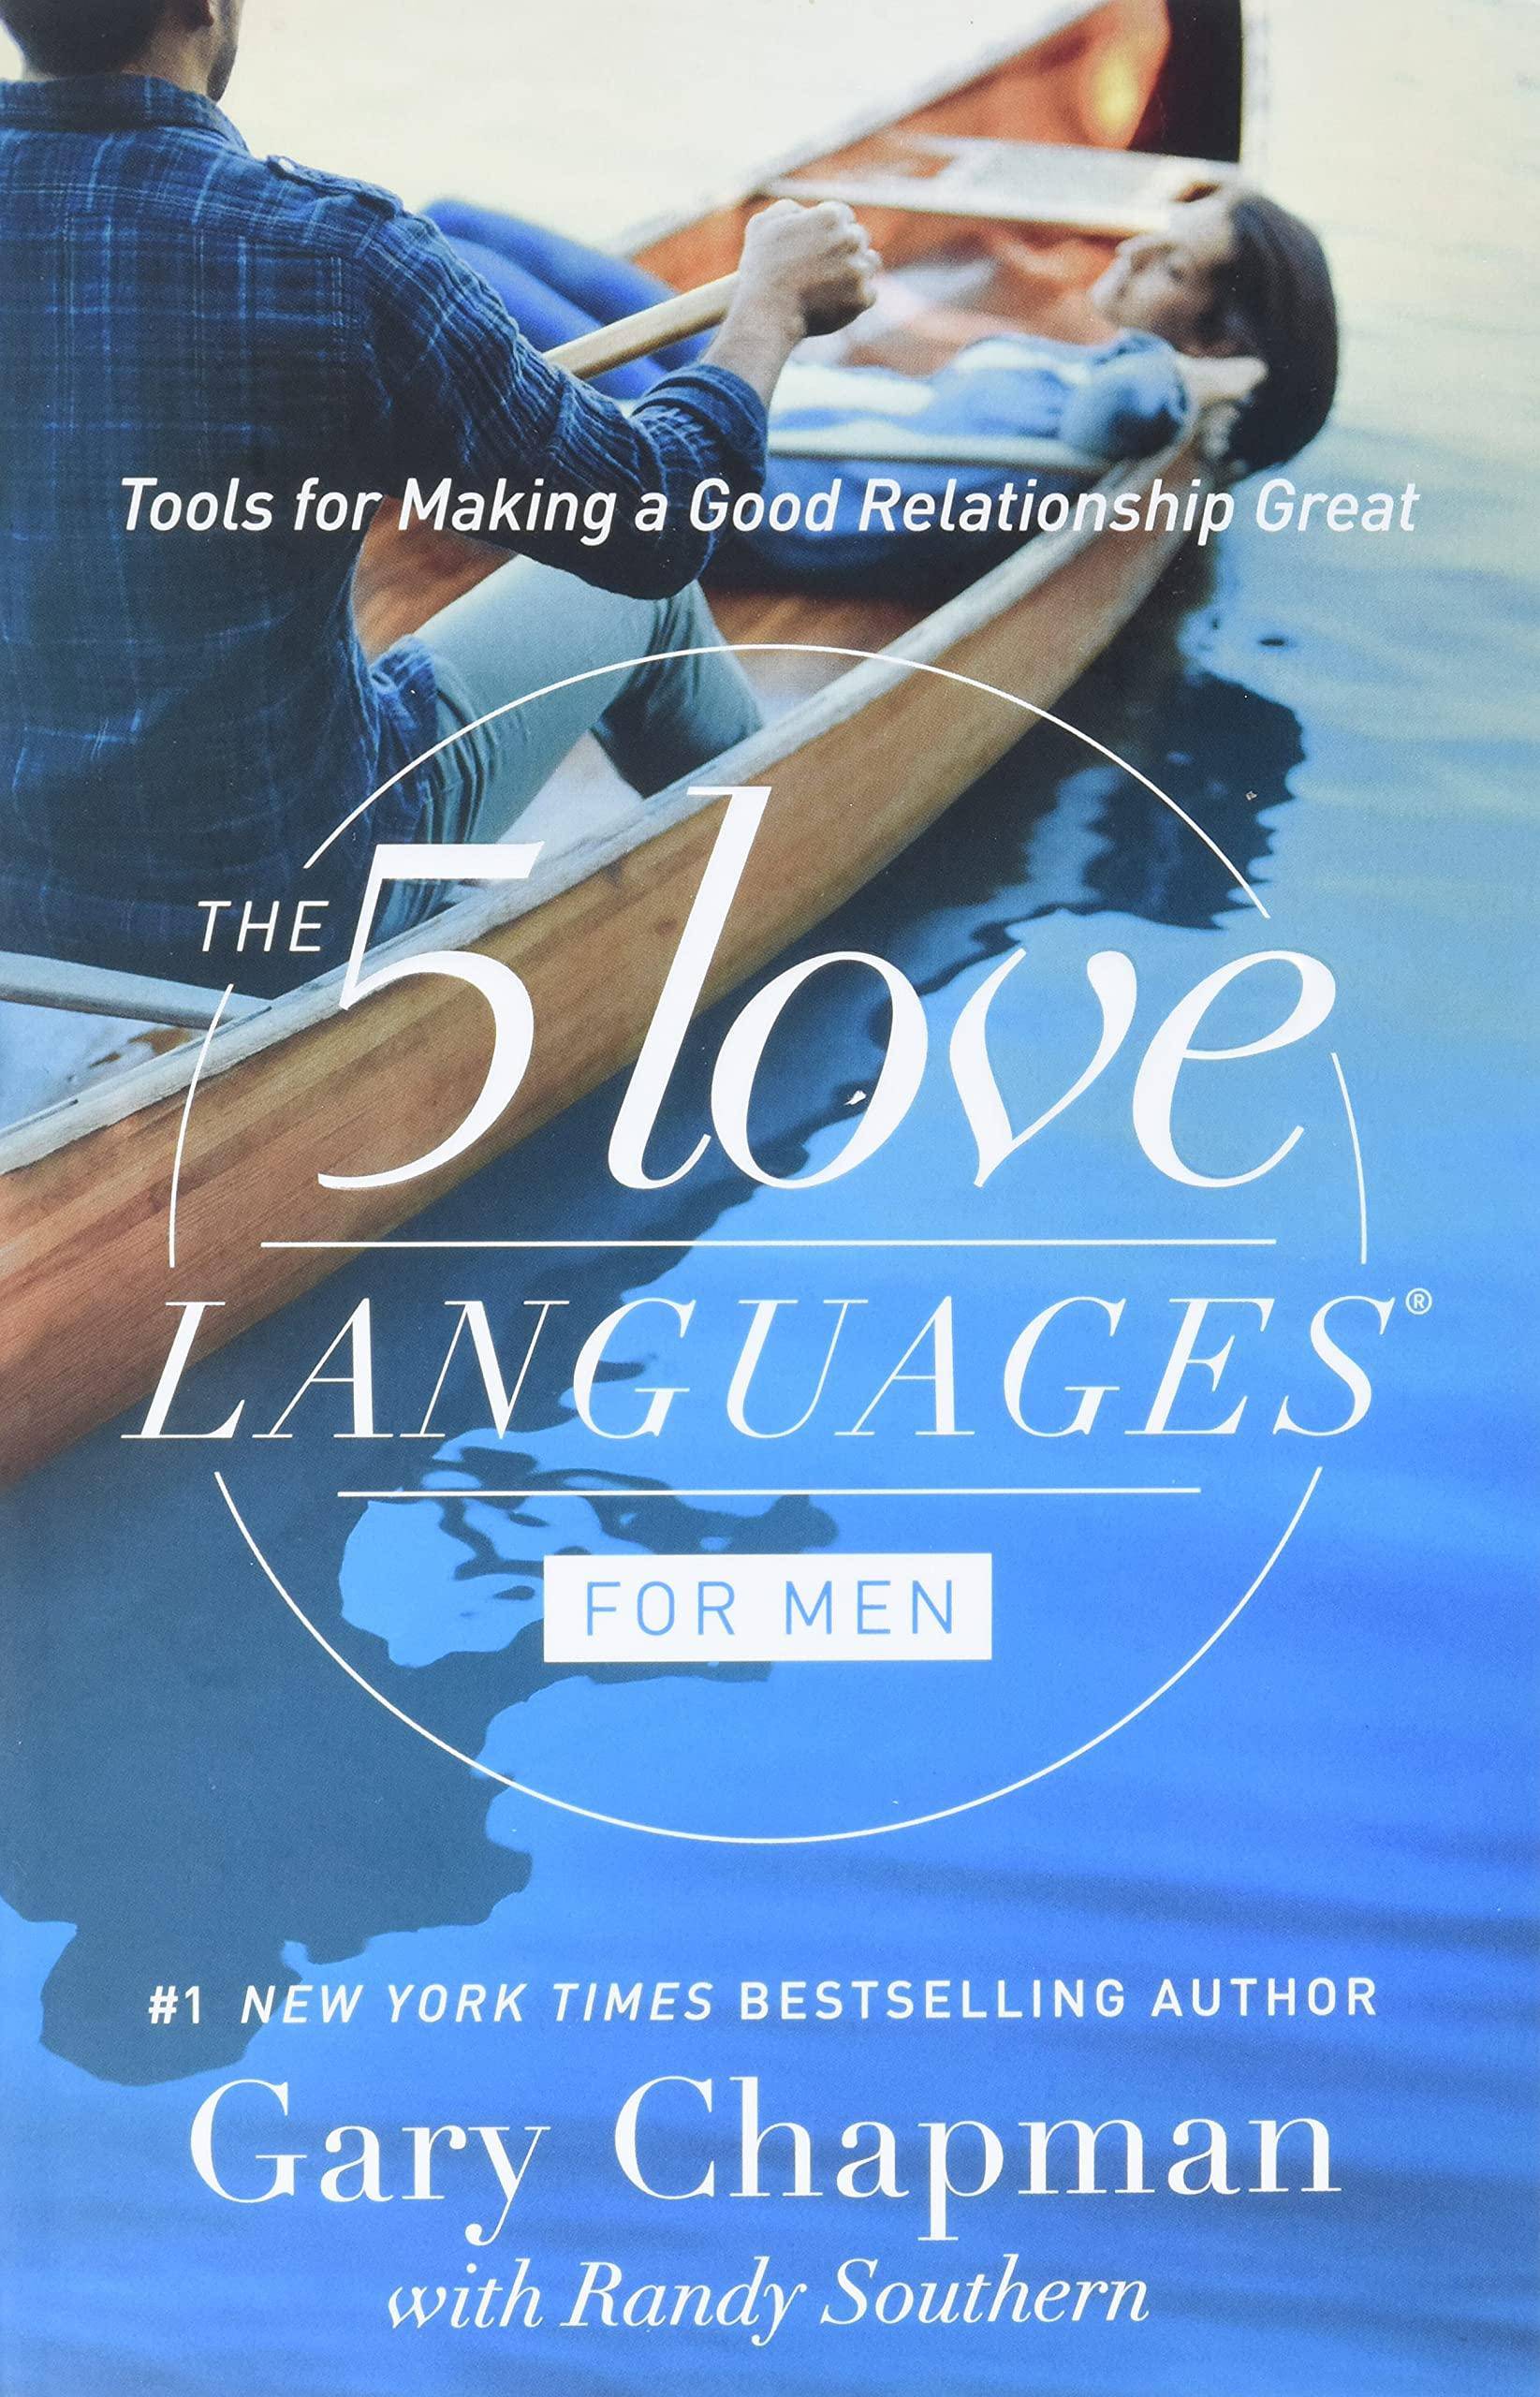 5 Love Languages for Men: Tools for Making a Good Relationship G - SureShot Books Publishing LLC